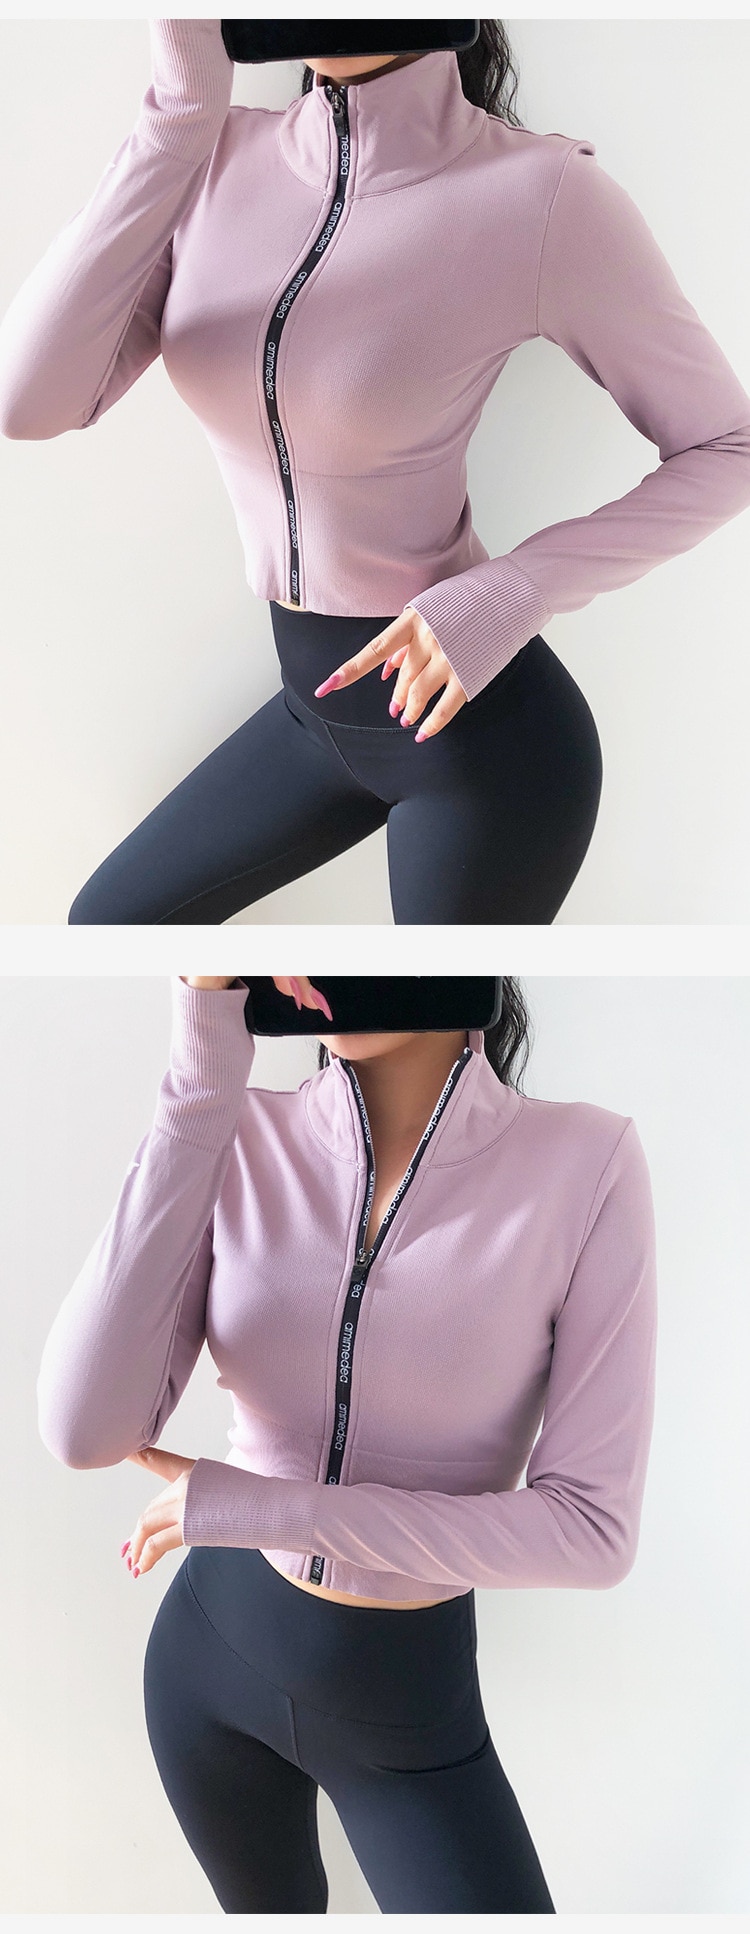 Woman Jerseys Sport shirt Women Jacket Long Sleeves Crop top Sports  Fit Fitness Yoga Top Workout Jacket Female Gym Shirts